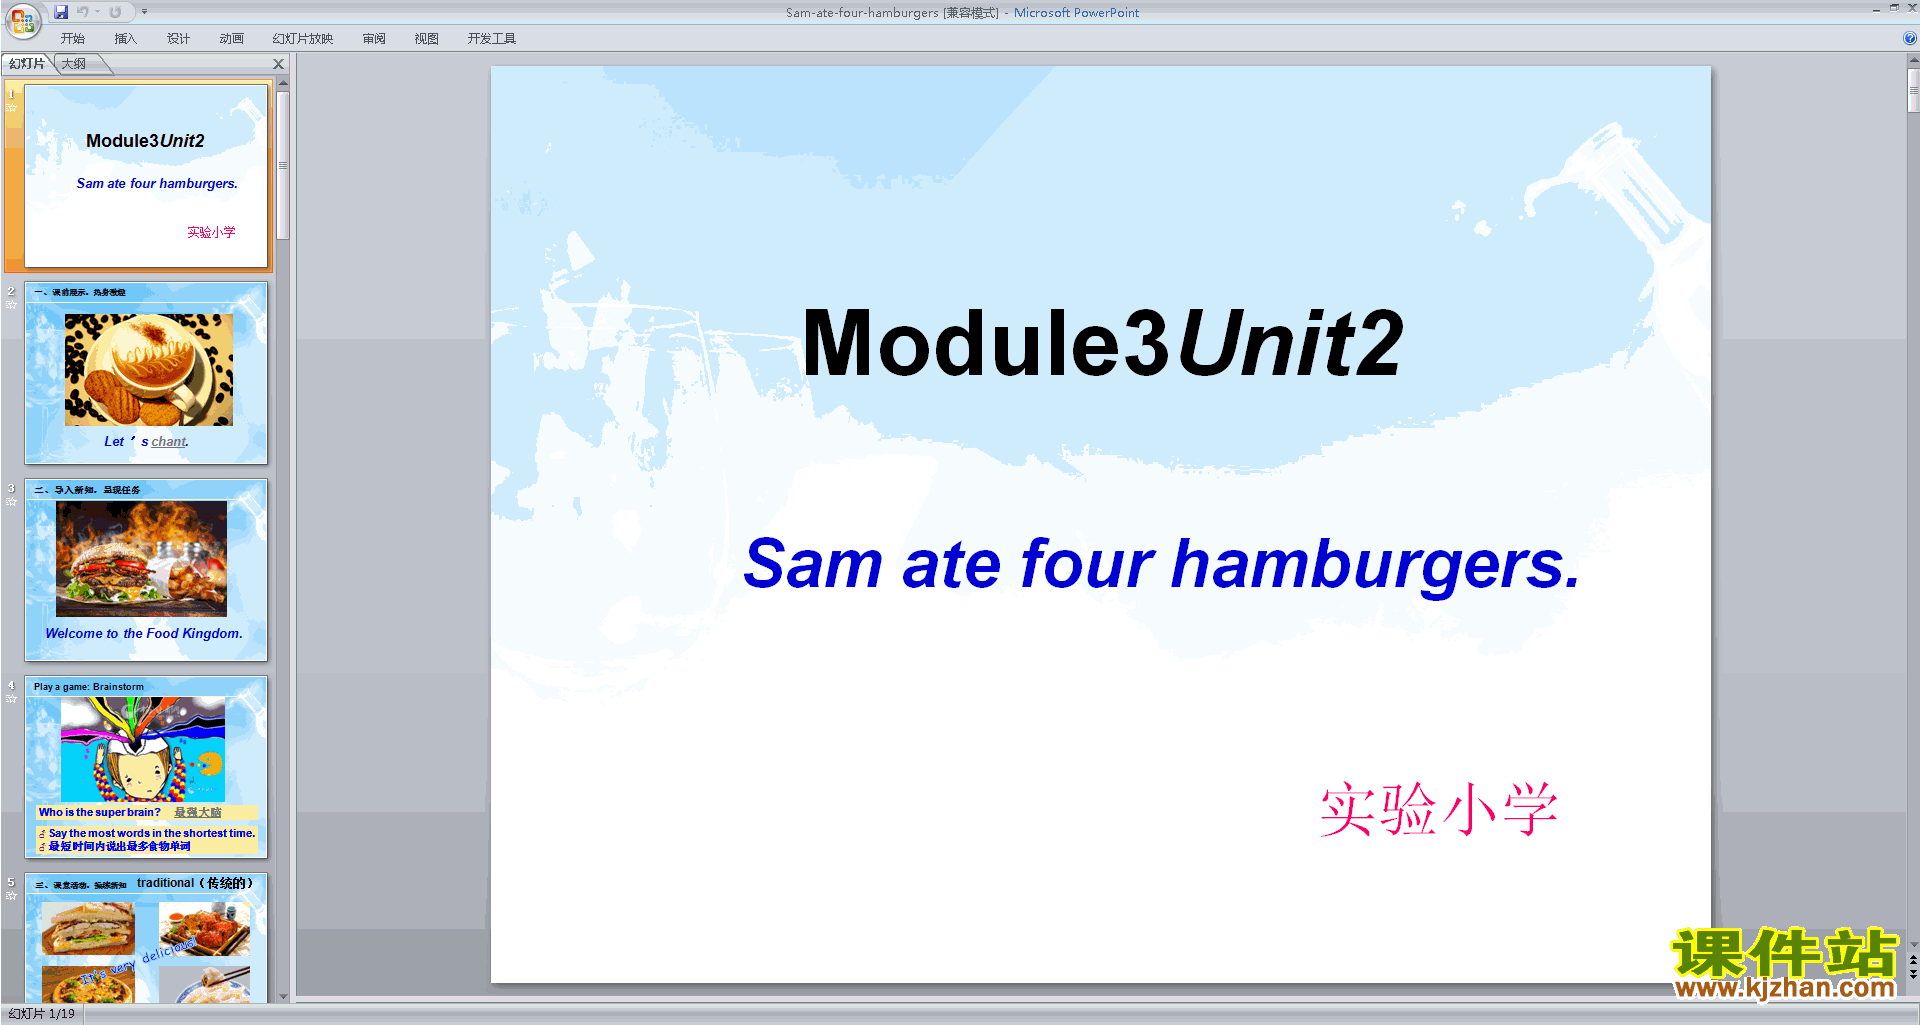 пModule3 Unit2 Sam ate four hamburgerspptμ